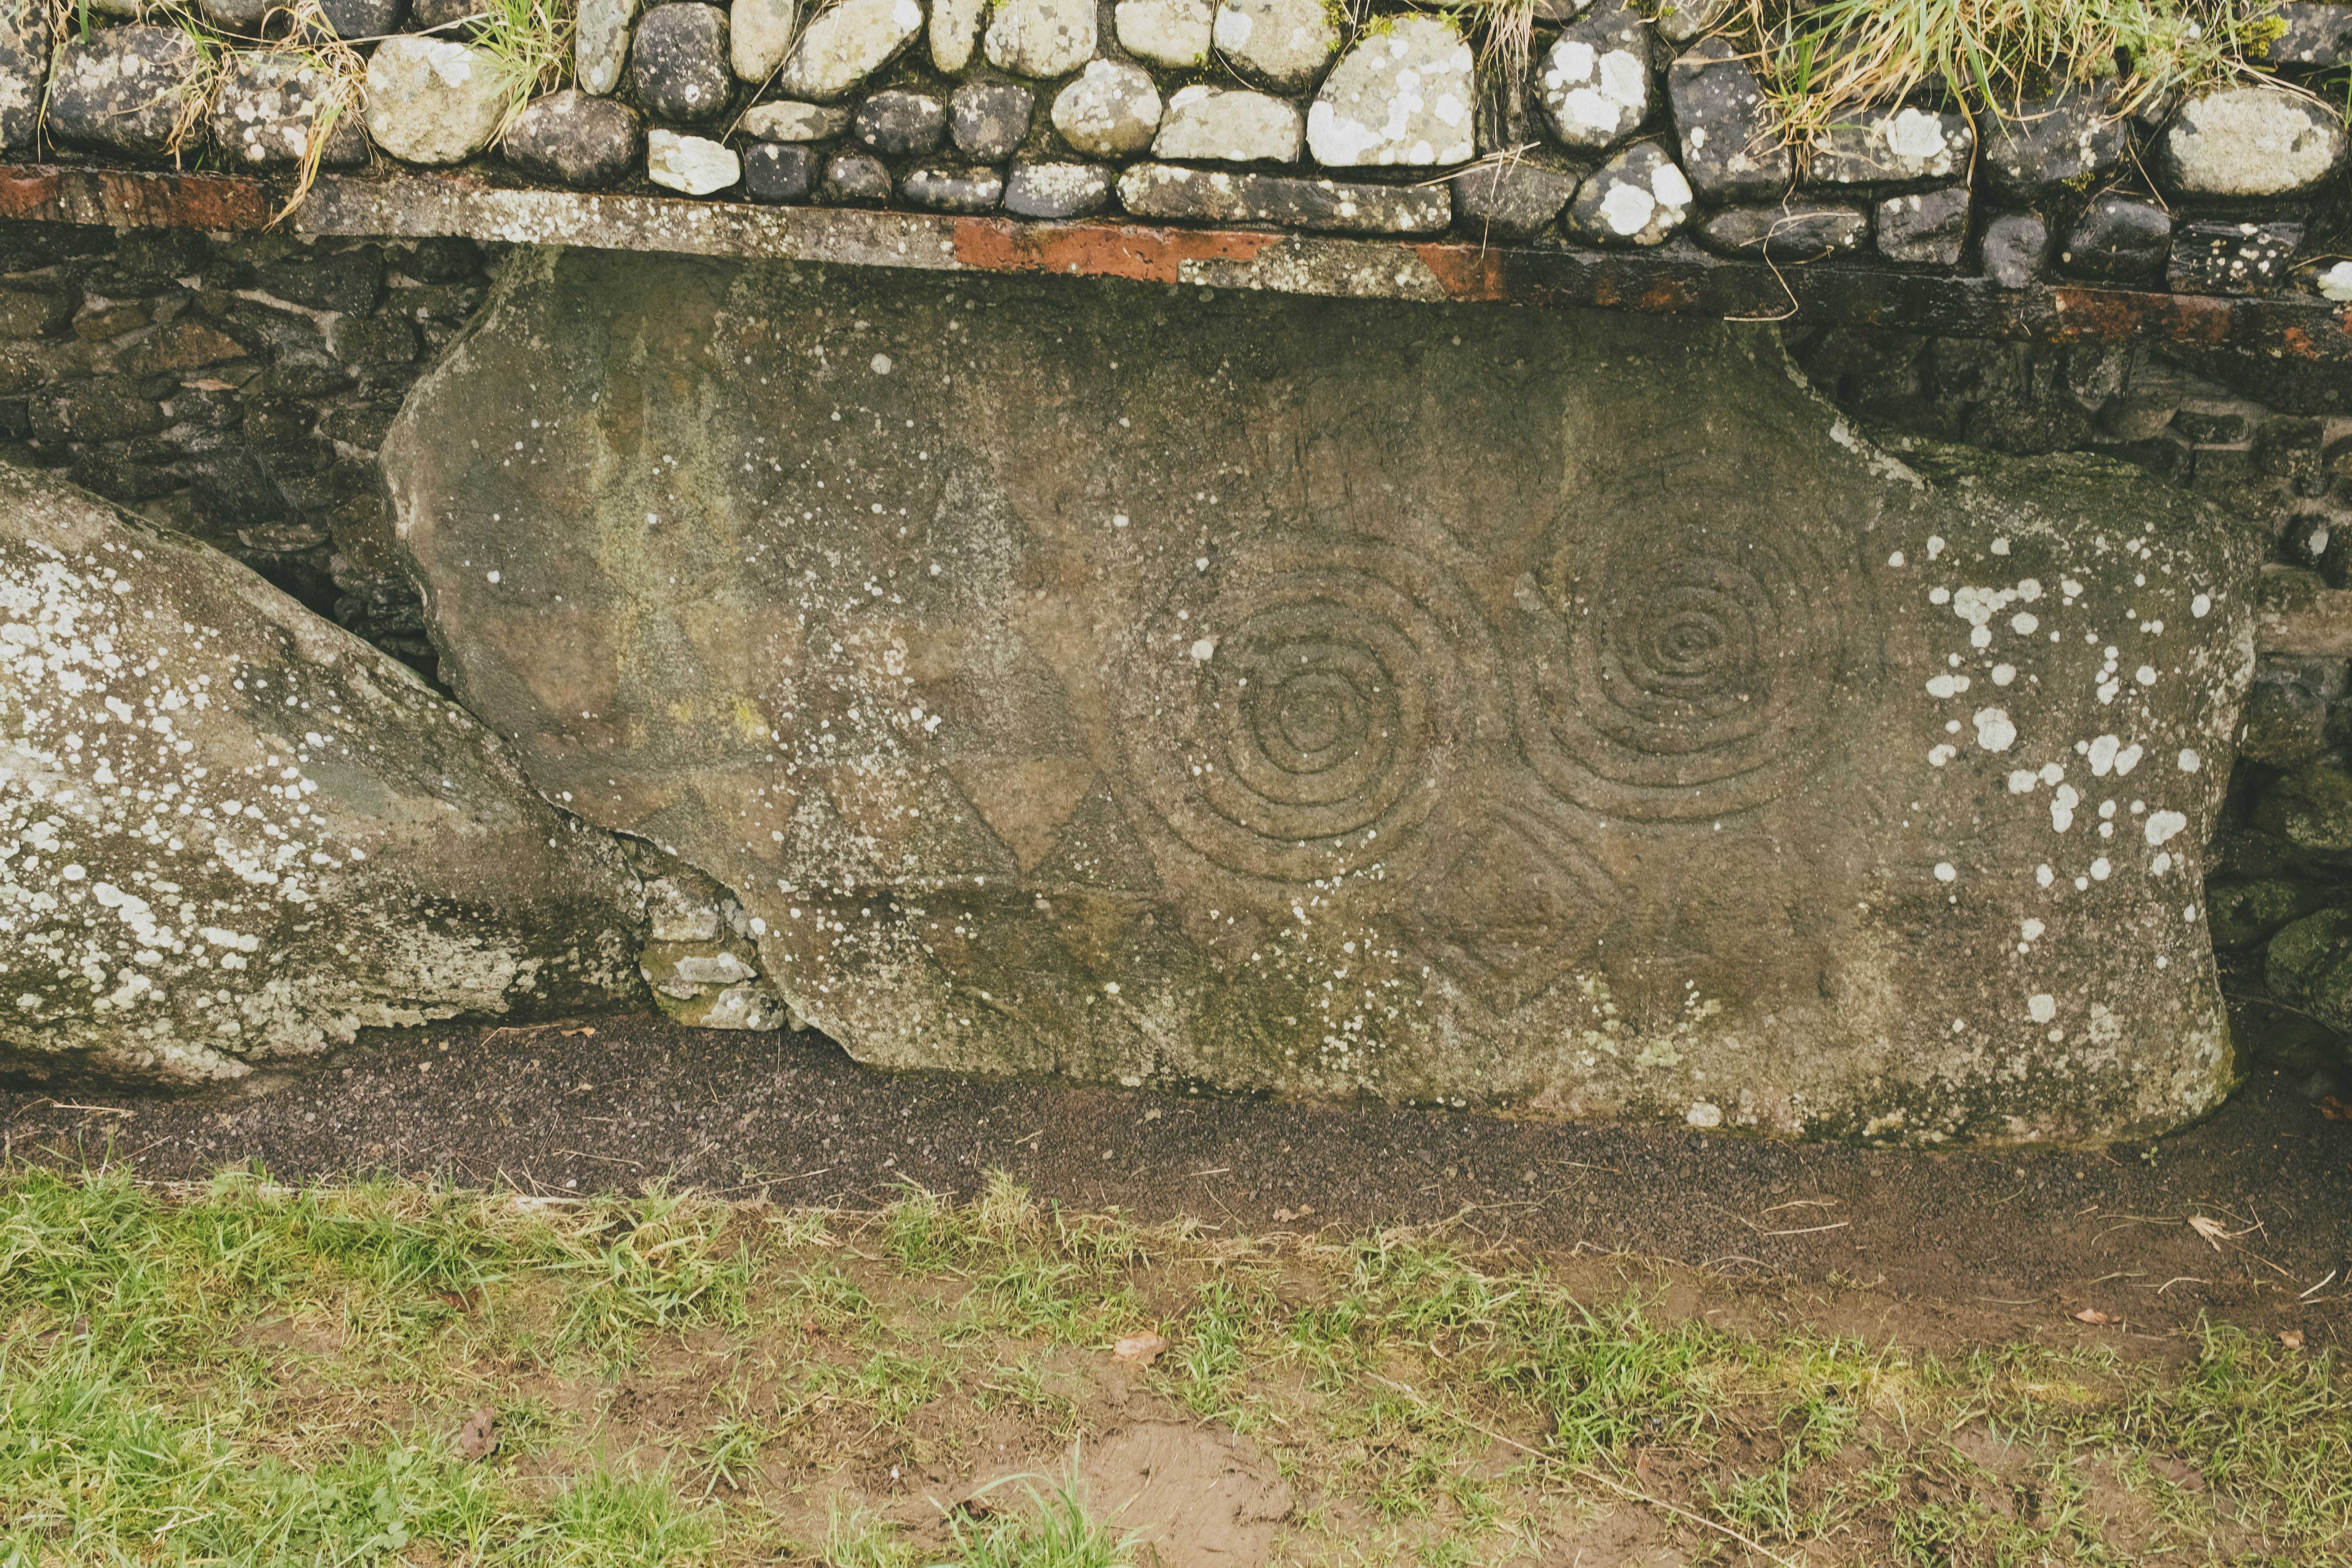 Celtic stone carvings resembling an owl